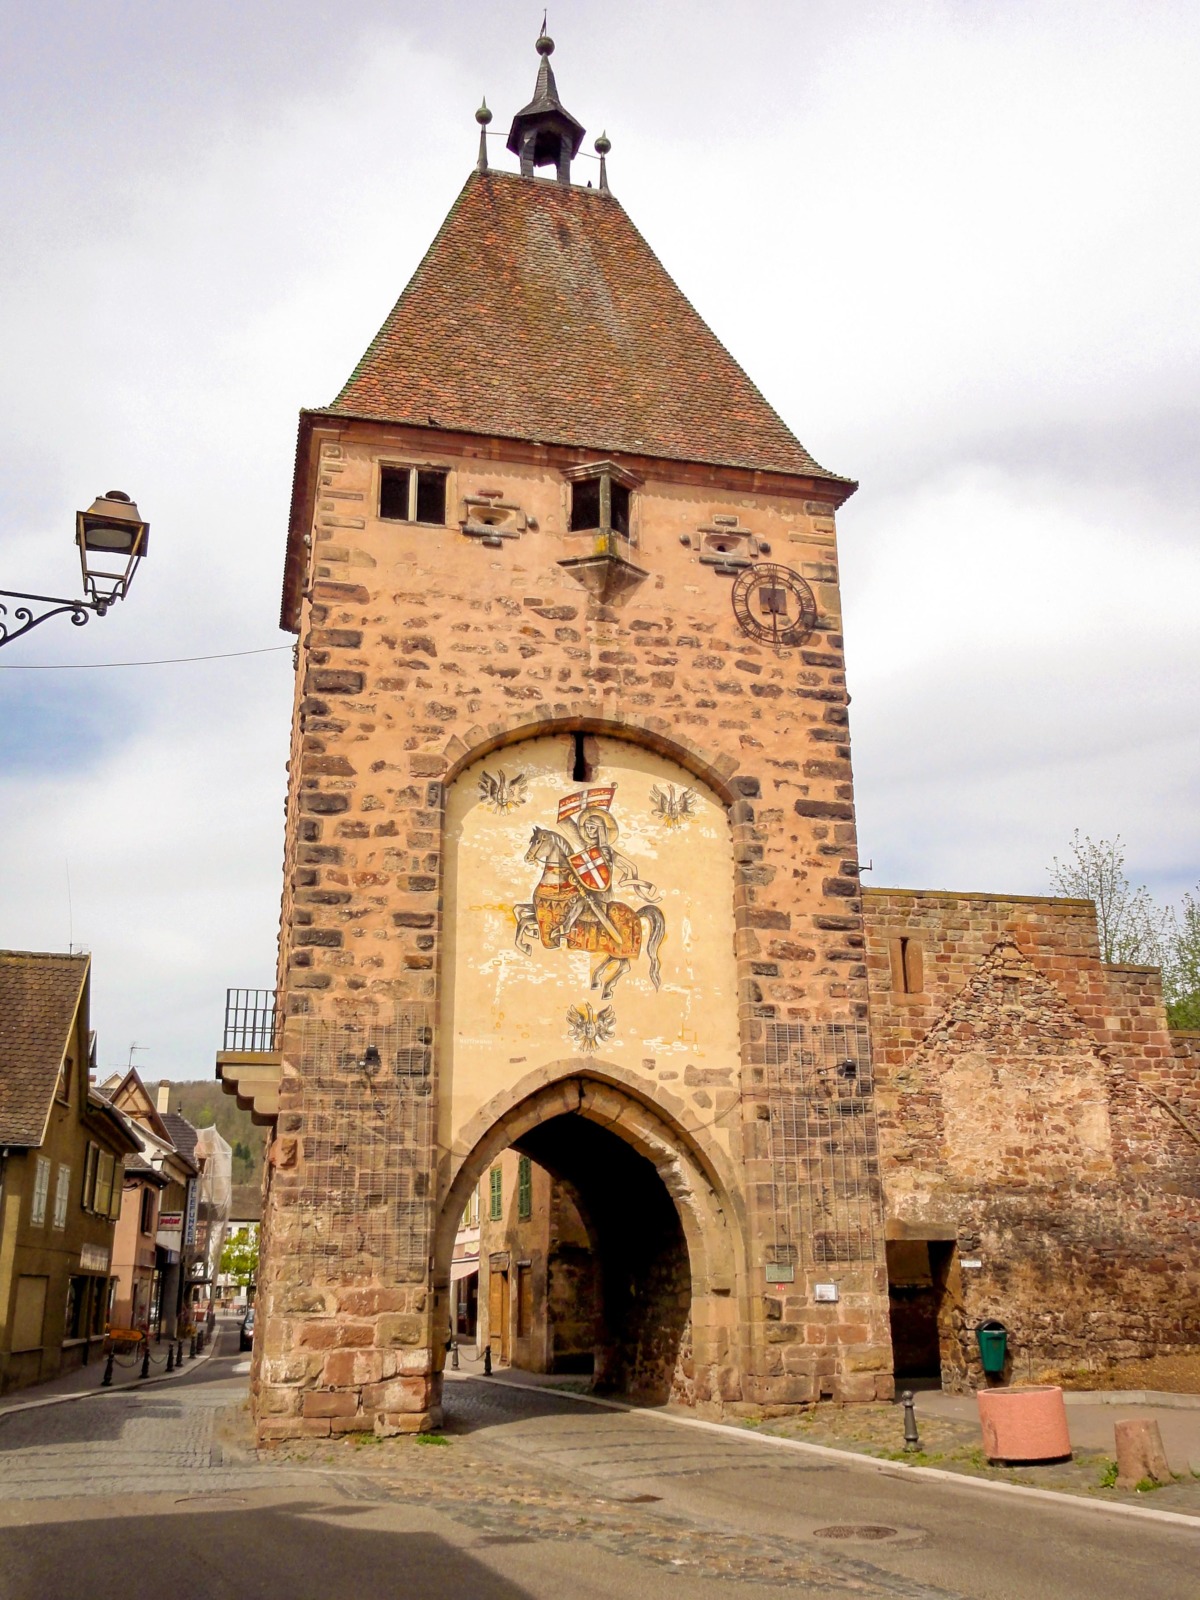 City gates of Alsace - Mutzig - Porte de Strasbourg © Ralph Hammann - licence [CC BY-SA 4.0] from Wikimedia Commons